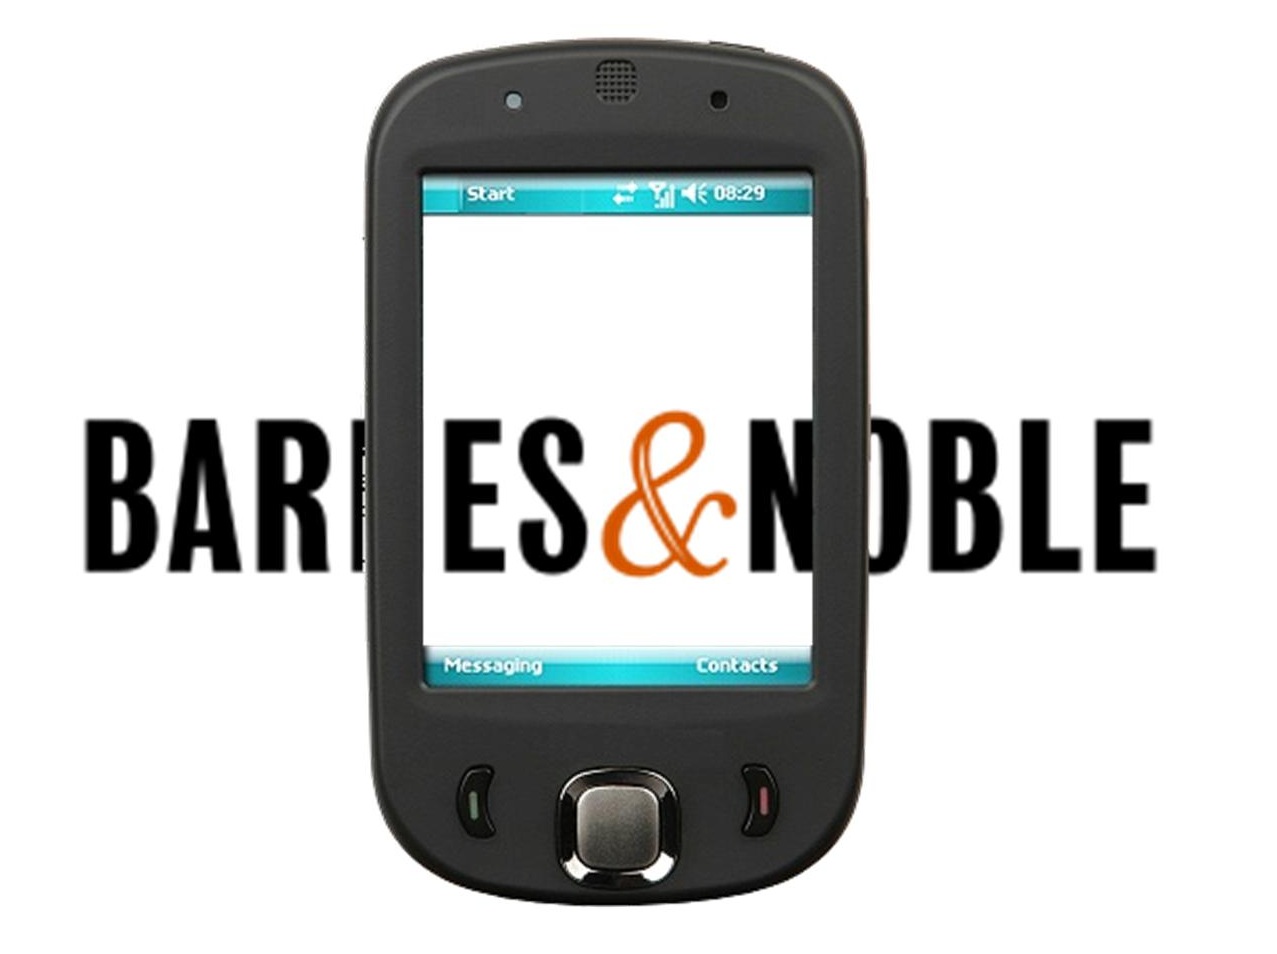 Barnes & Noble Mobile Commerce